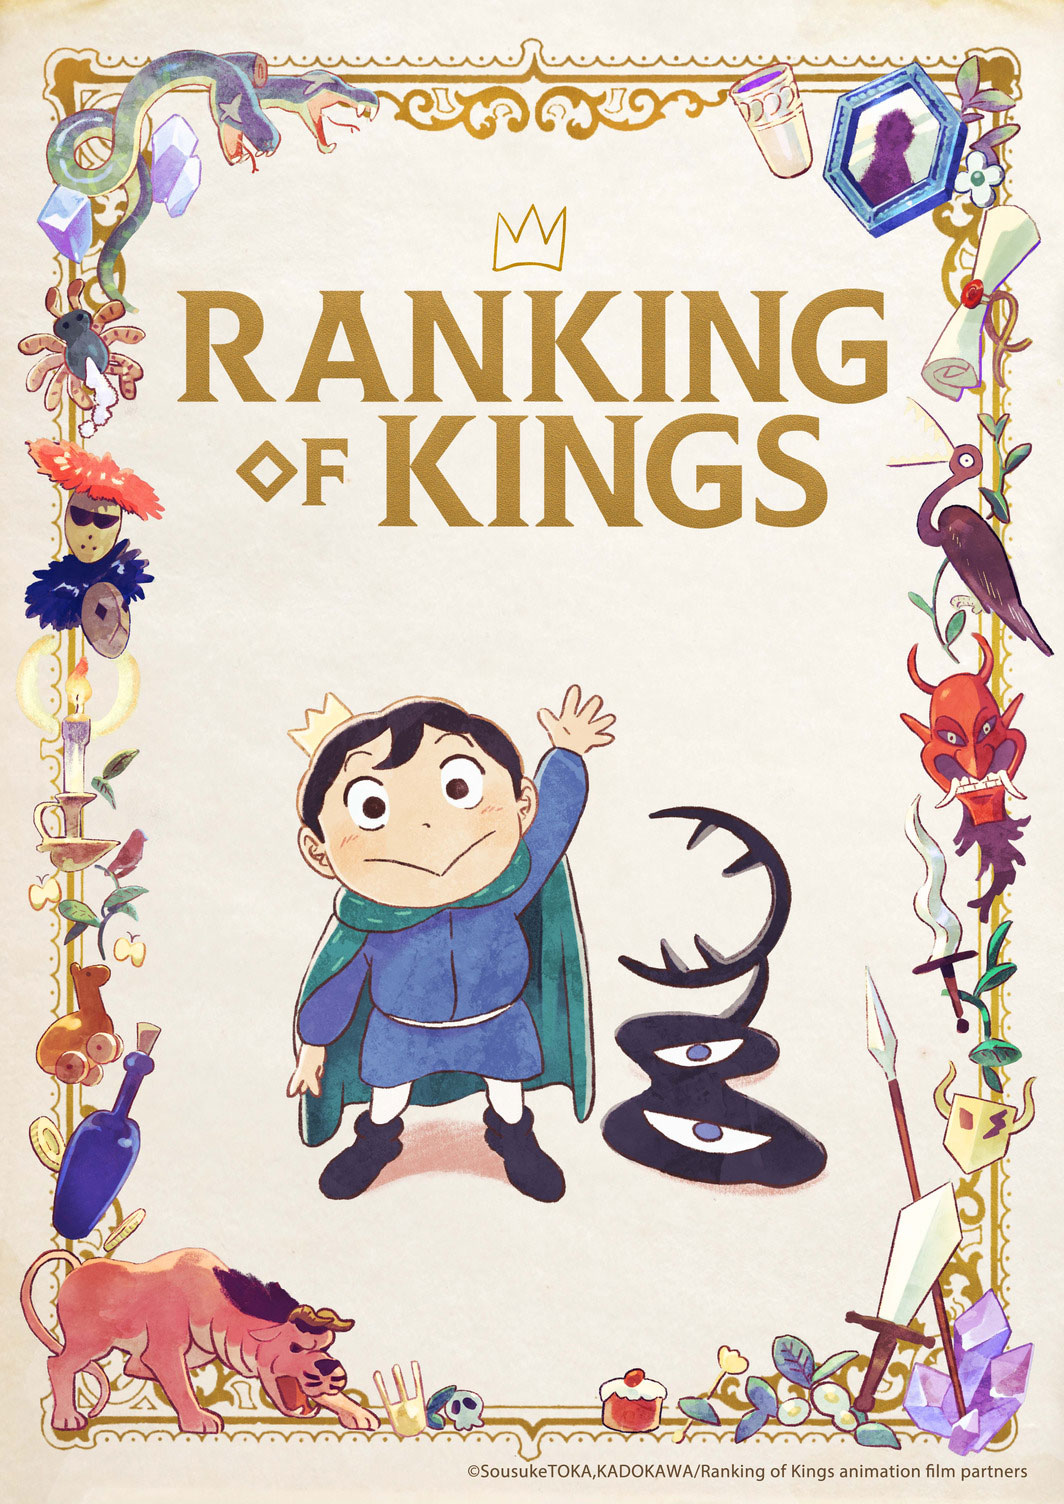 Ousama Ranking (Ranking Of Kings) Funimation